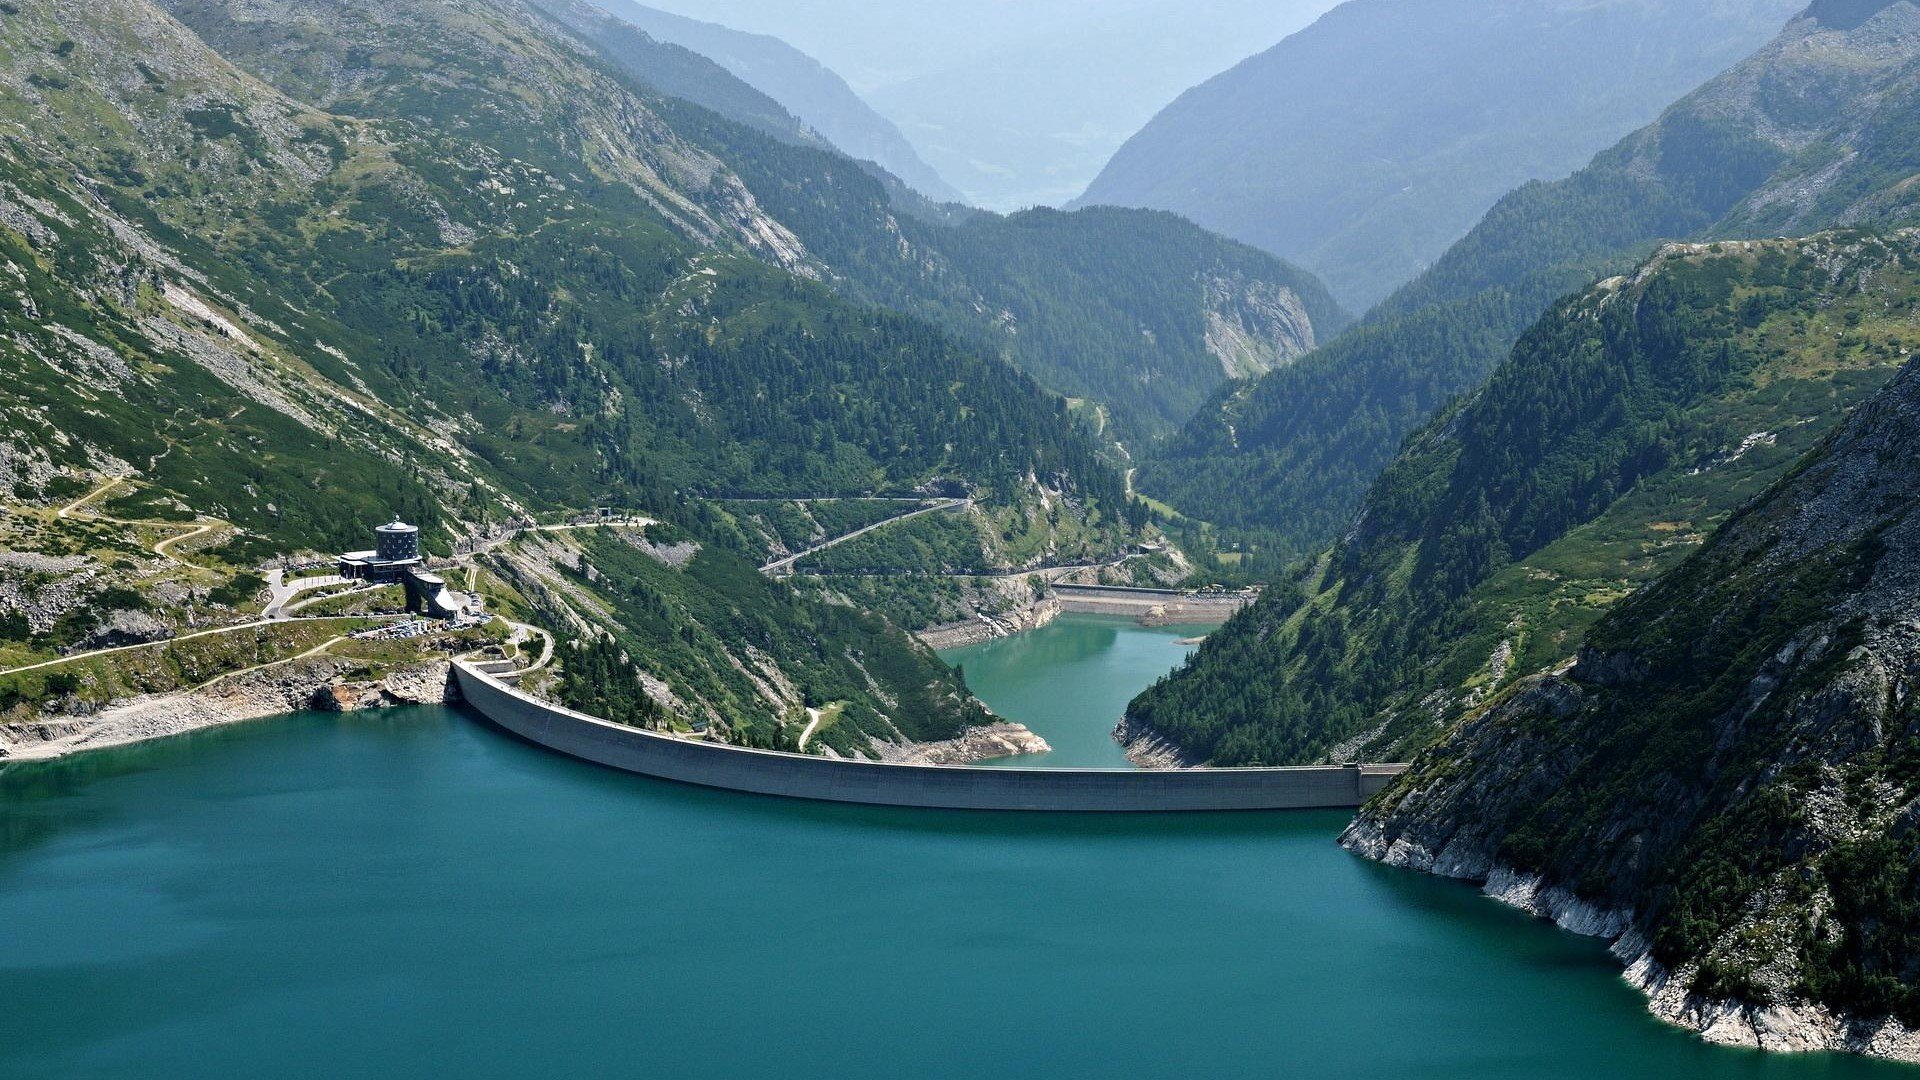 austria wallpaper,water resources,water,reservoir,mountainous landforms,mountain